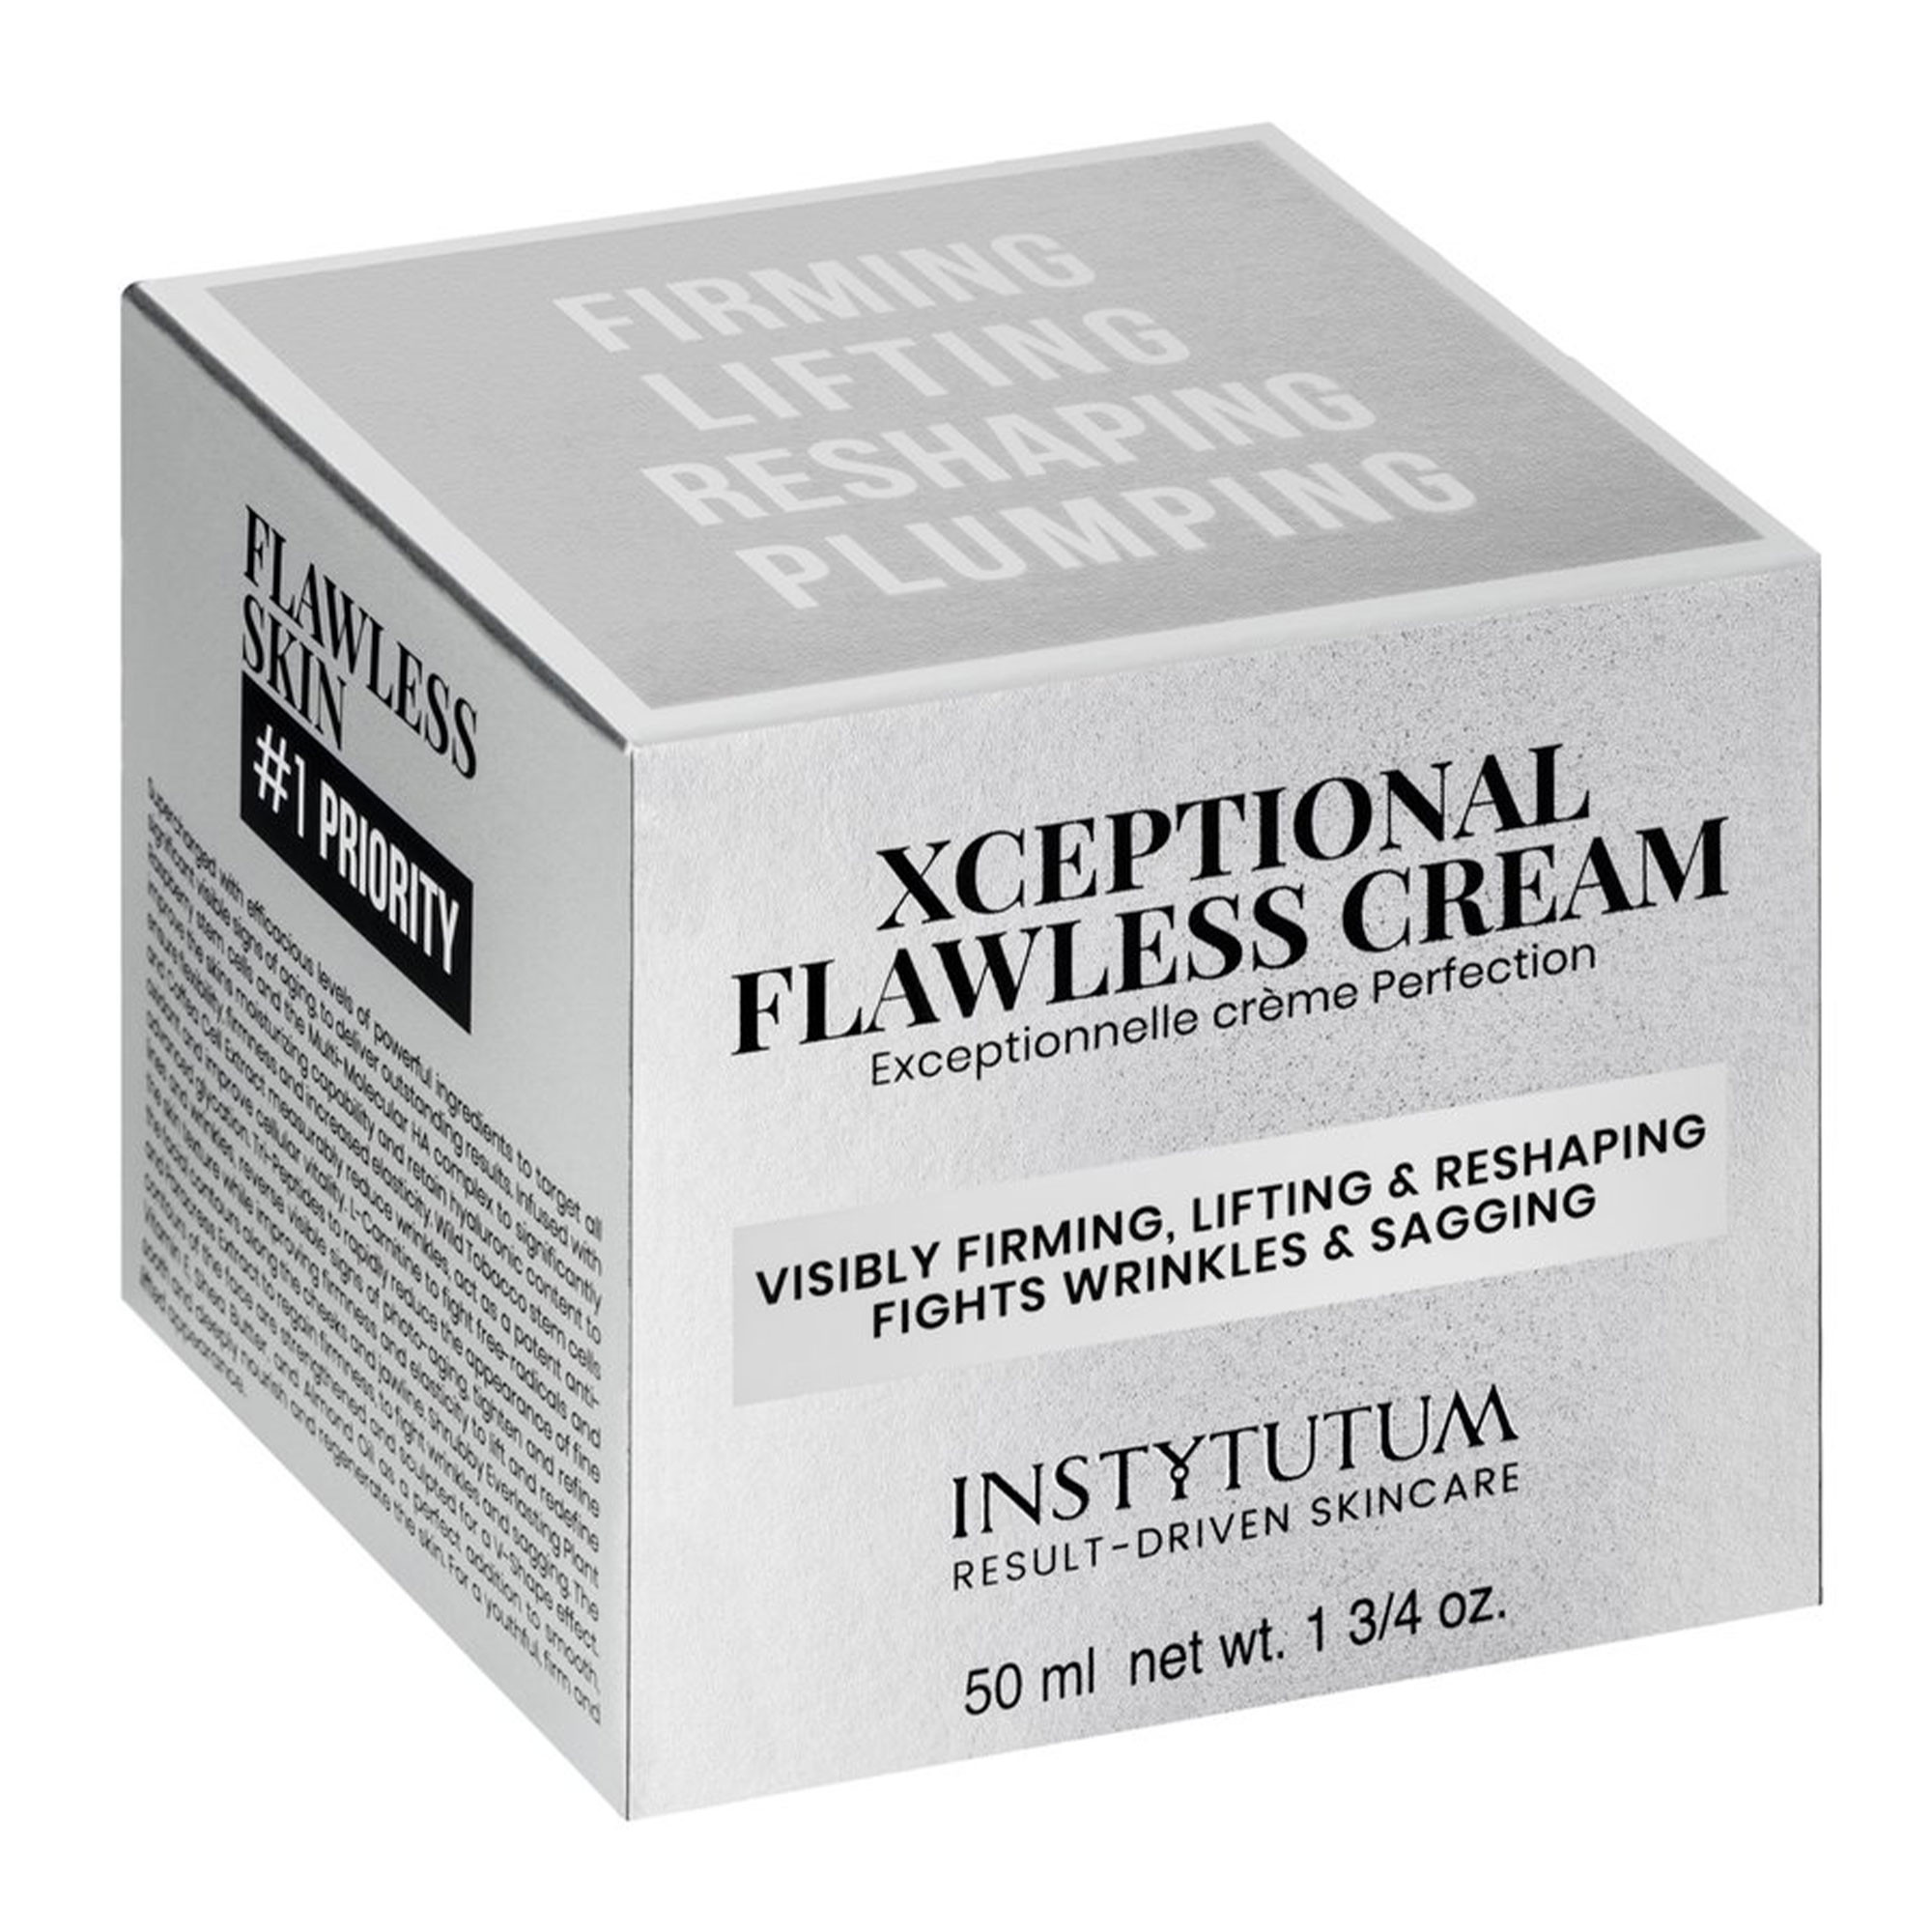 instytutum xceptional flawless cream купить